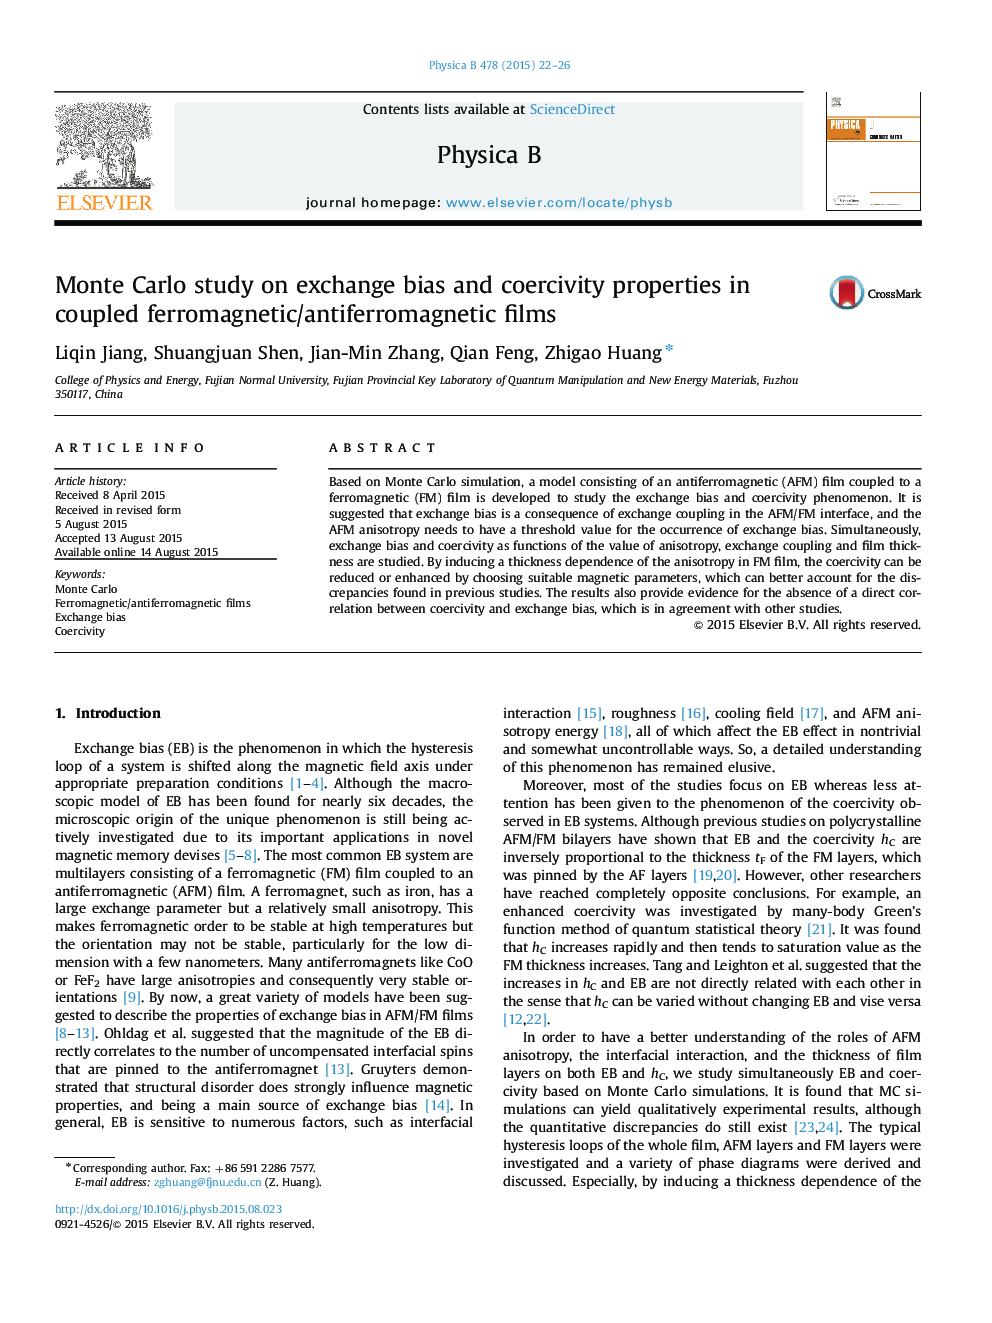 Monte Carlo study on exchange bias and coercivity properties in coupled ferromagnetic/antiferromagnetic films